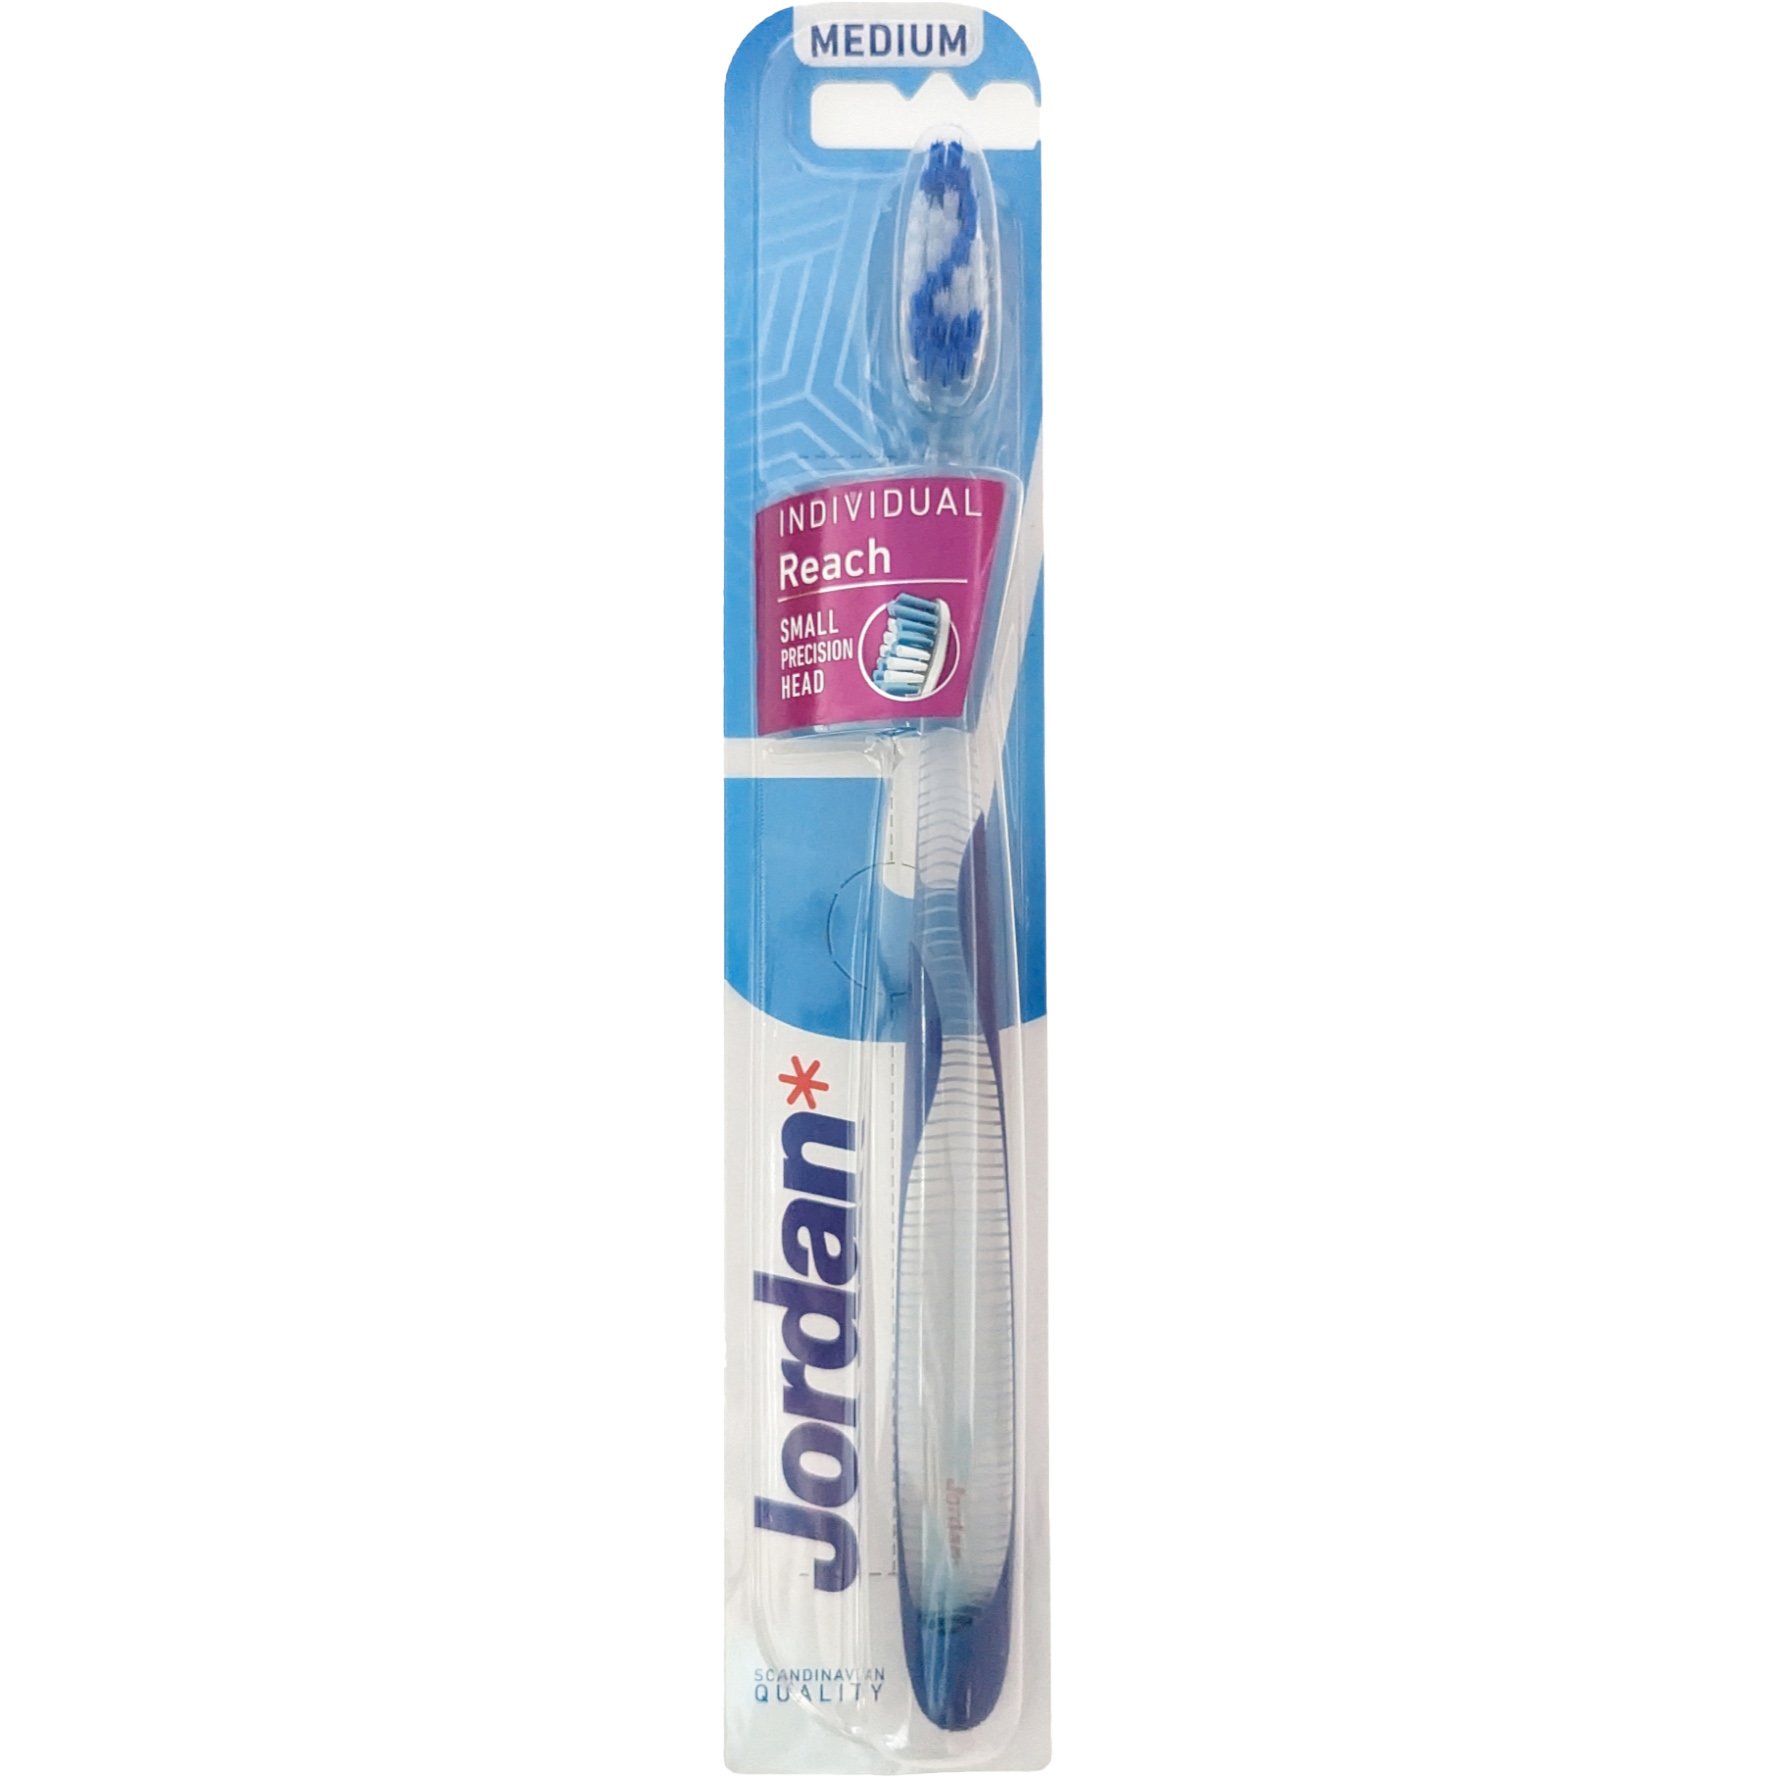 Jordan Individual Reach Medium Toothbrush Μέτρια Οδοντόβουρτσα με Εργονομική Λαβή για Βαθύ Καθαρισμό 1 Τεμάχιο Κωδ 310040 – Μπλε / Διάφανο